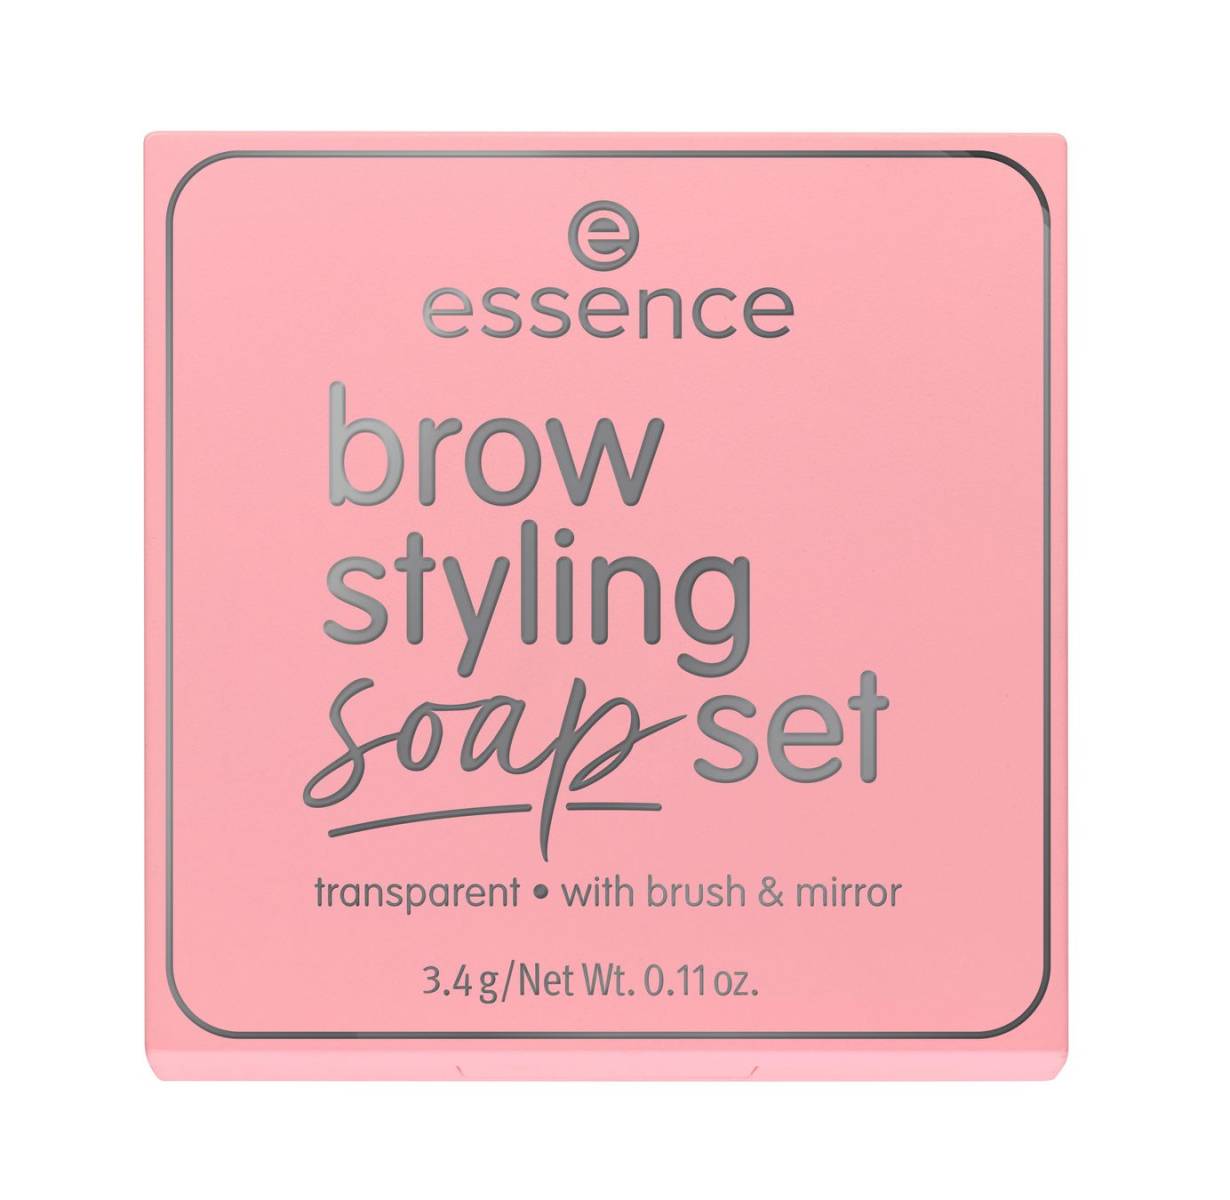 brow styling soap set Image jpg